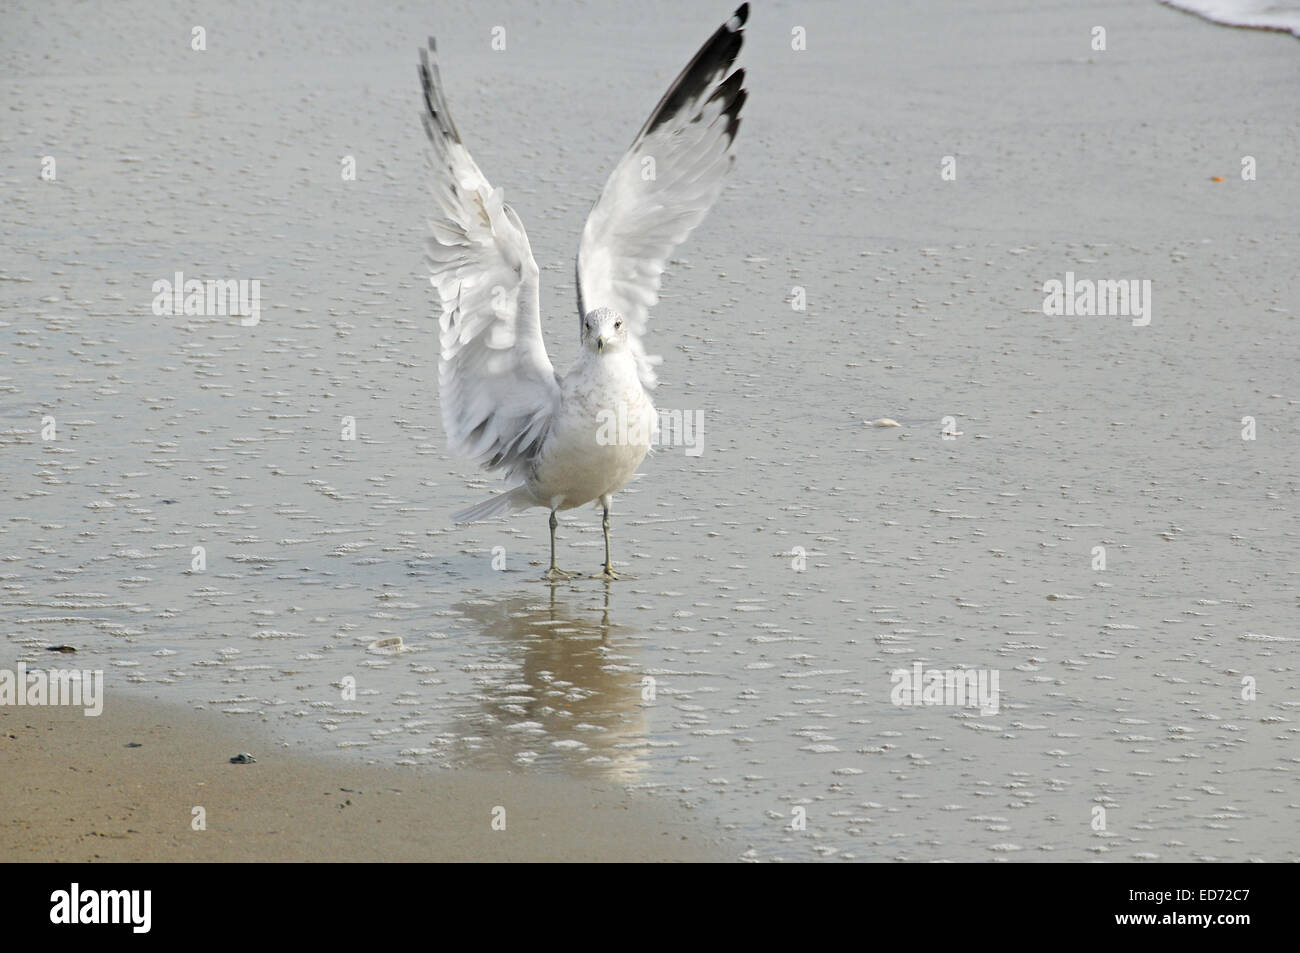 Belle sea gull landing on beach Banque D'Images